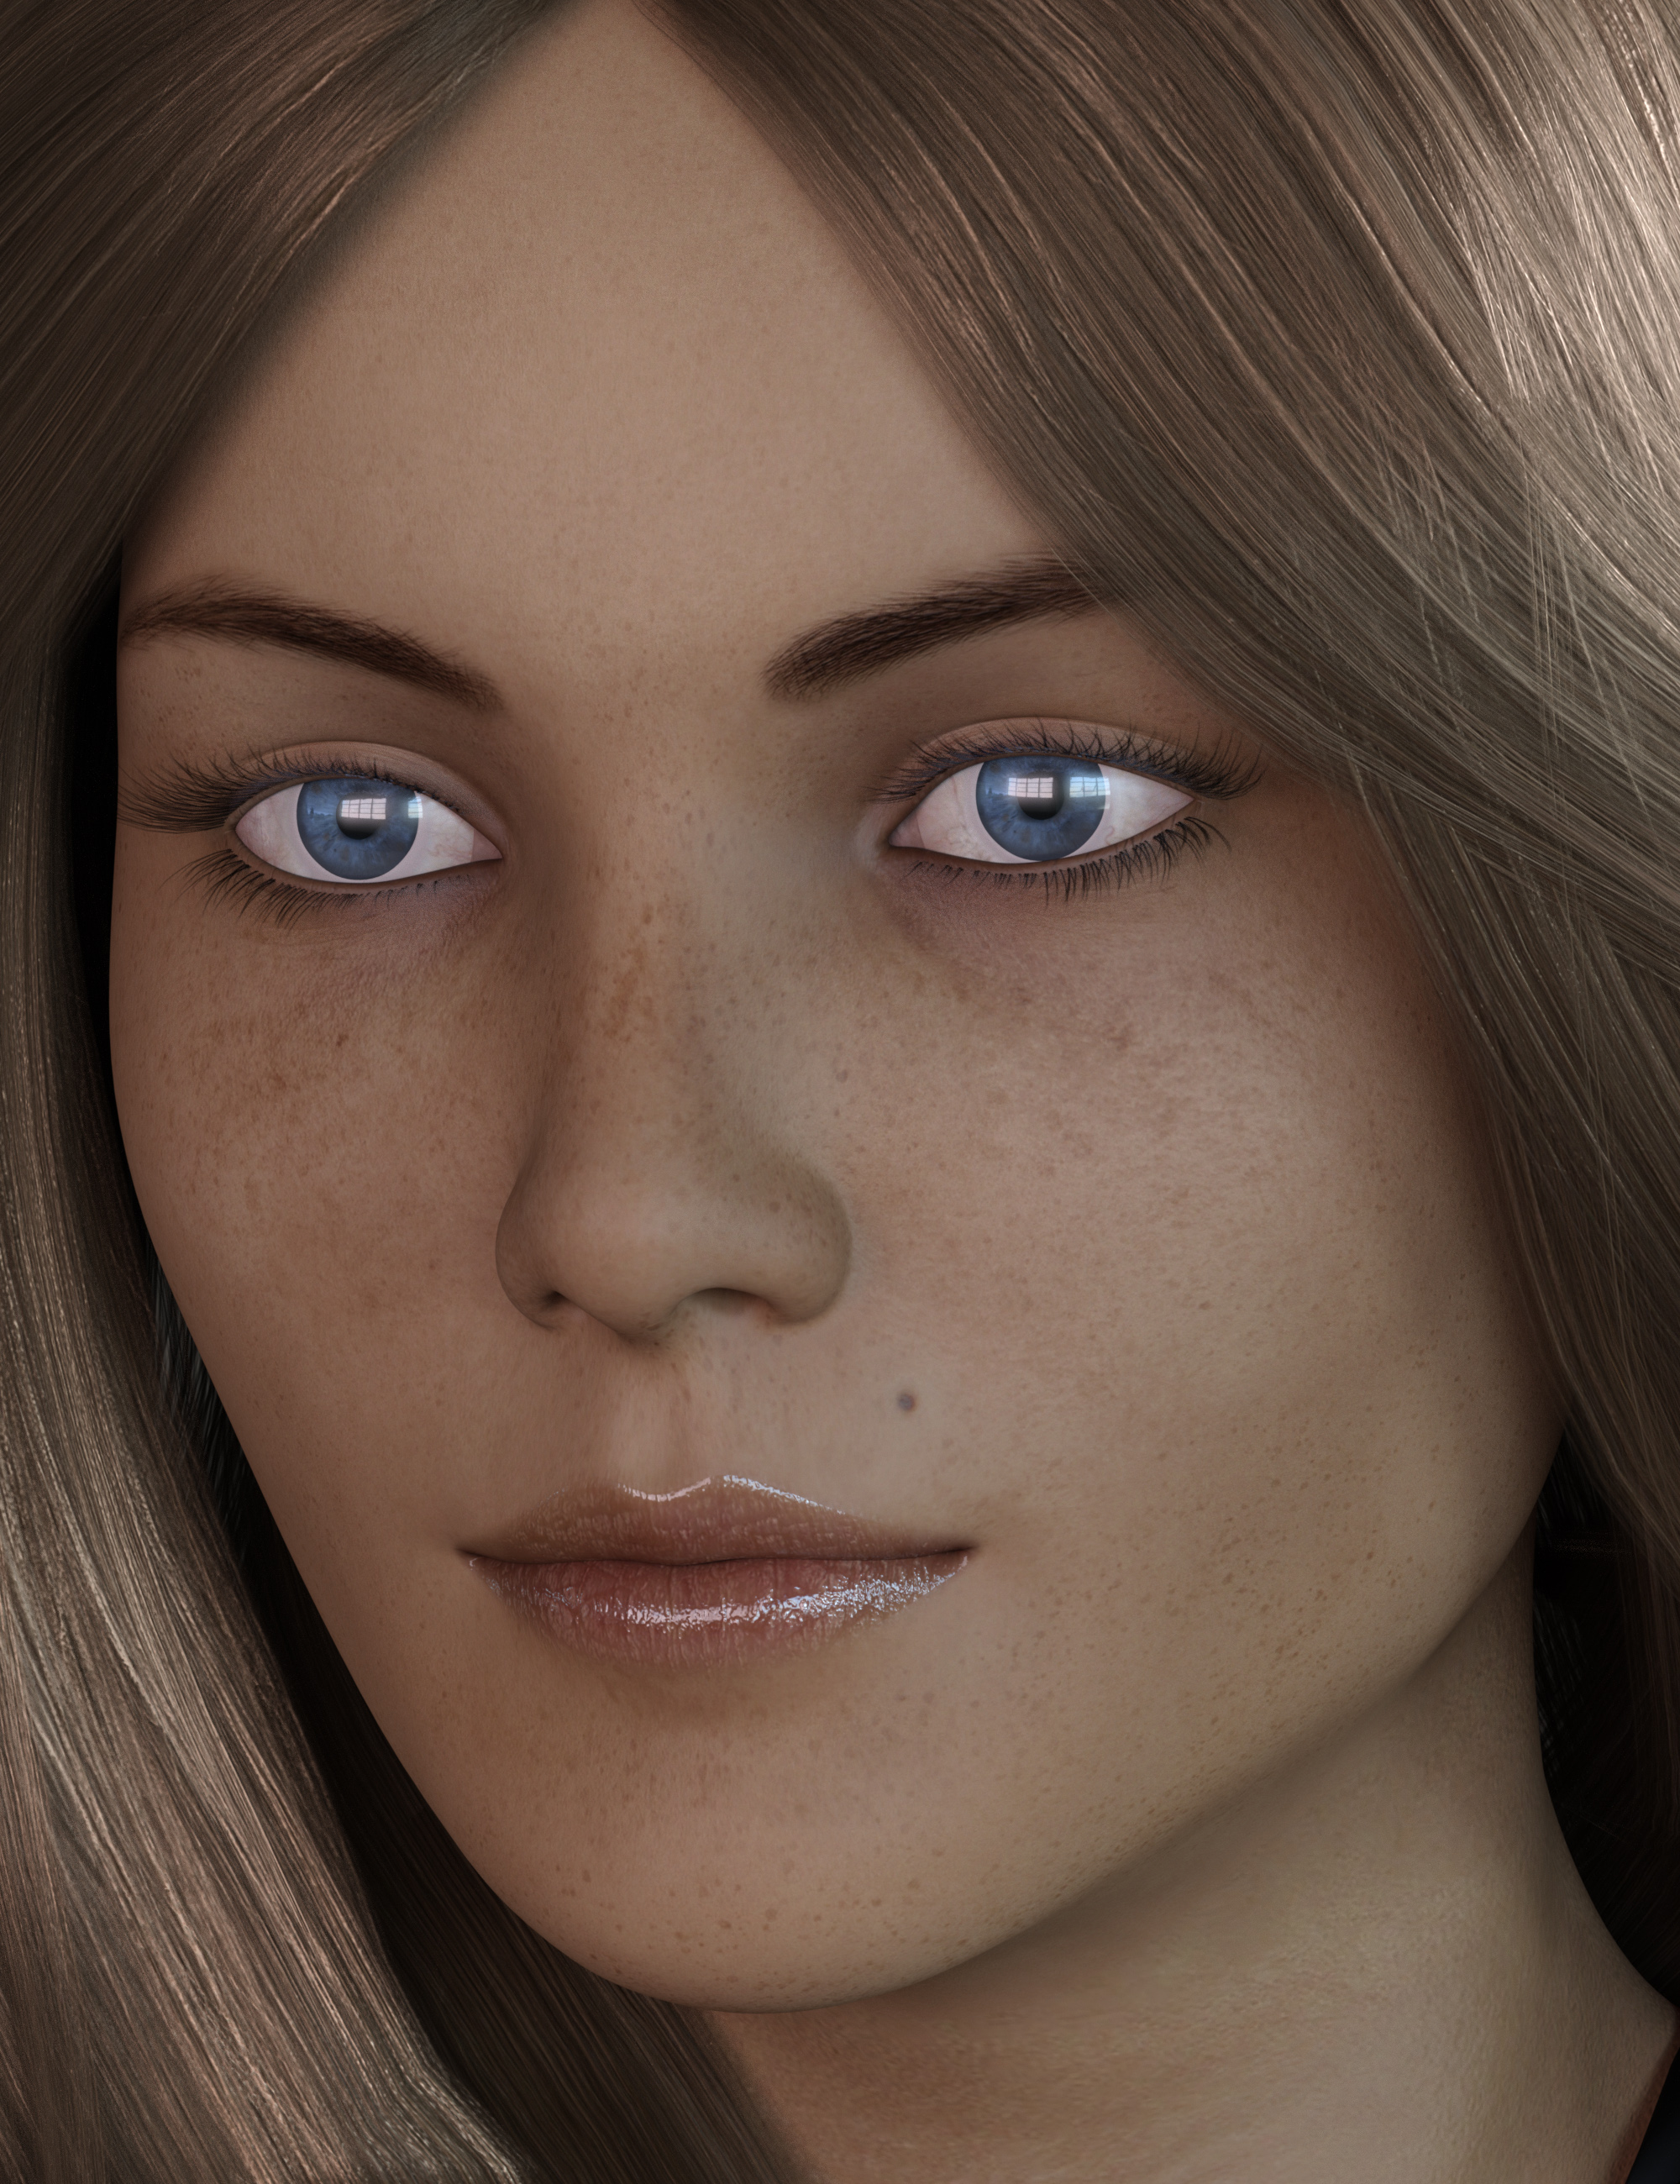 DE Deanna for Genesis 8 Female by: Dark-Elf, 3D Models by Daz 3D